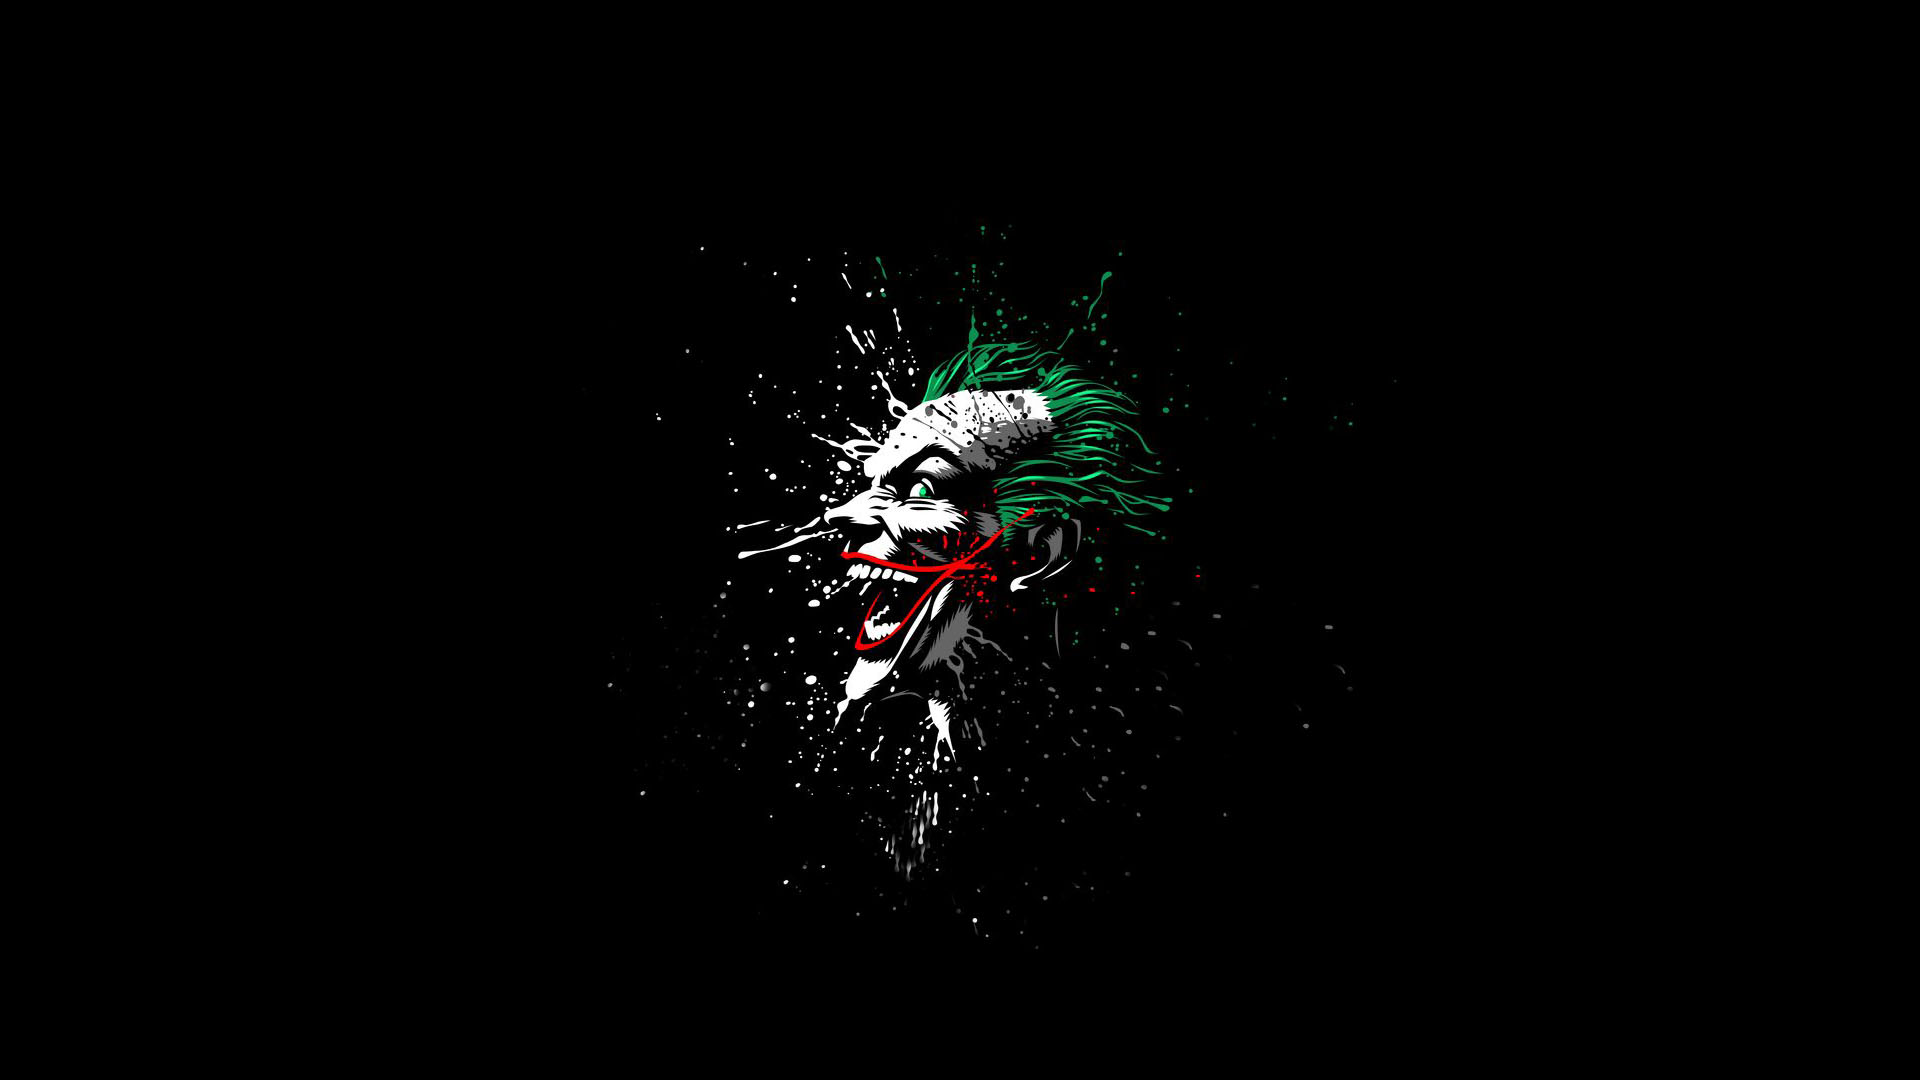  Joker  Batman Comics Black  Artwork Green Red White  